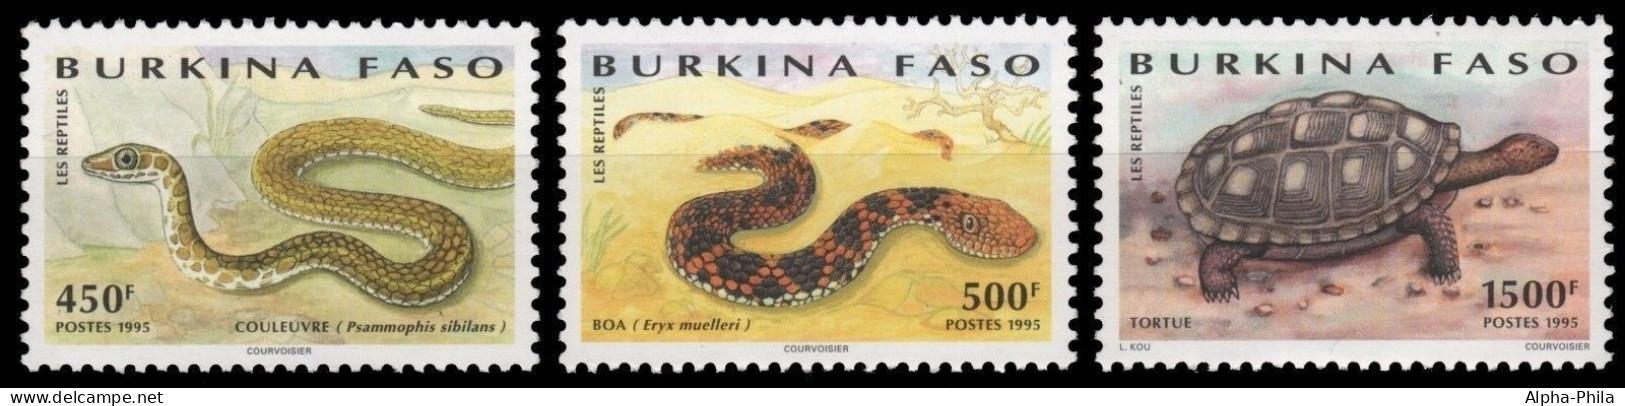 Burkina Faso 1995 - Mi-Nr. 1375-1377 ** - MNH - Reptilien / Reptiles - Burkina Faso (1984-...)